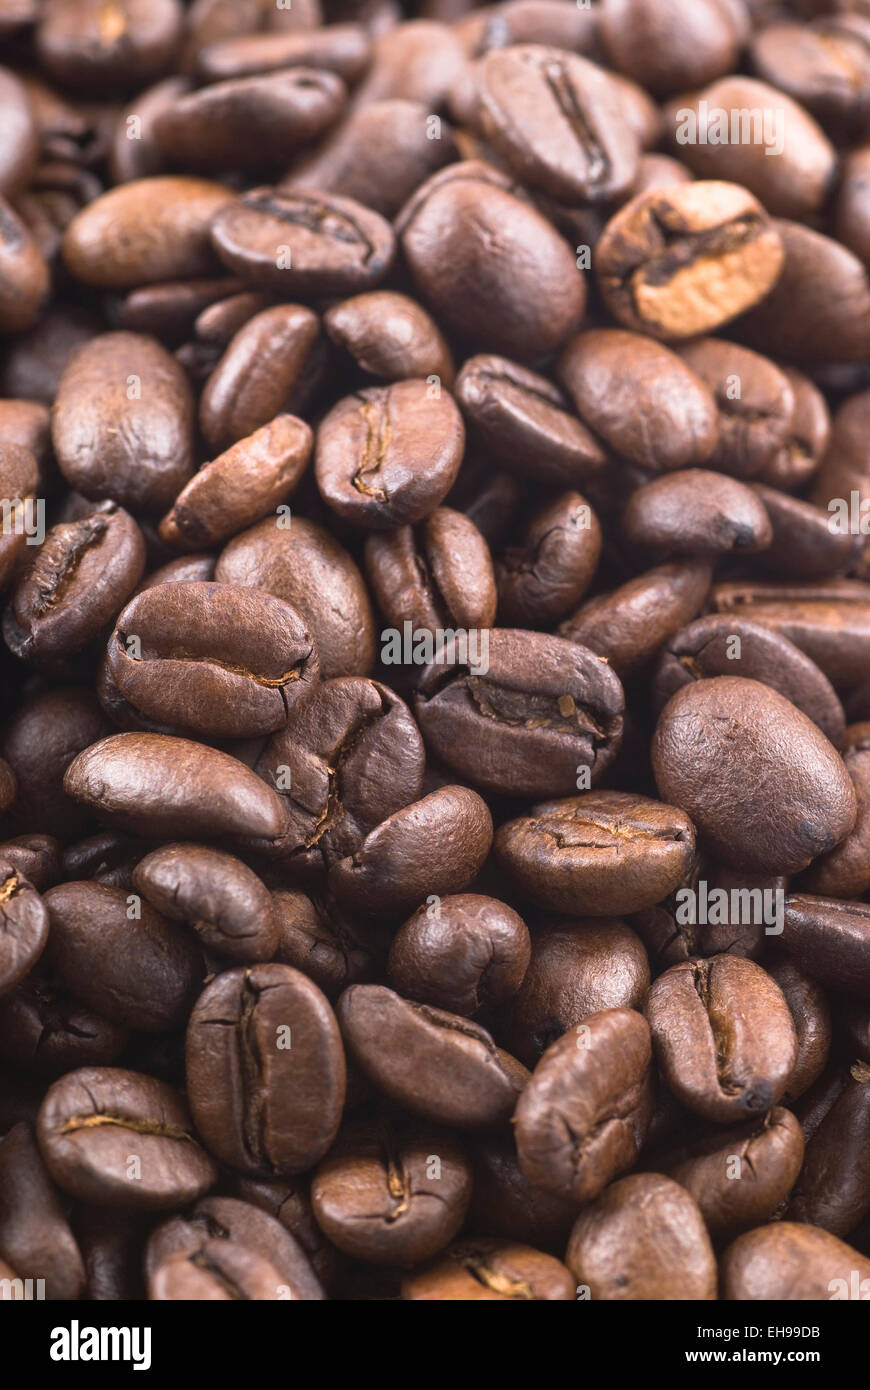 Coffee beans full frame. Stock Photo